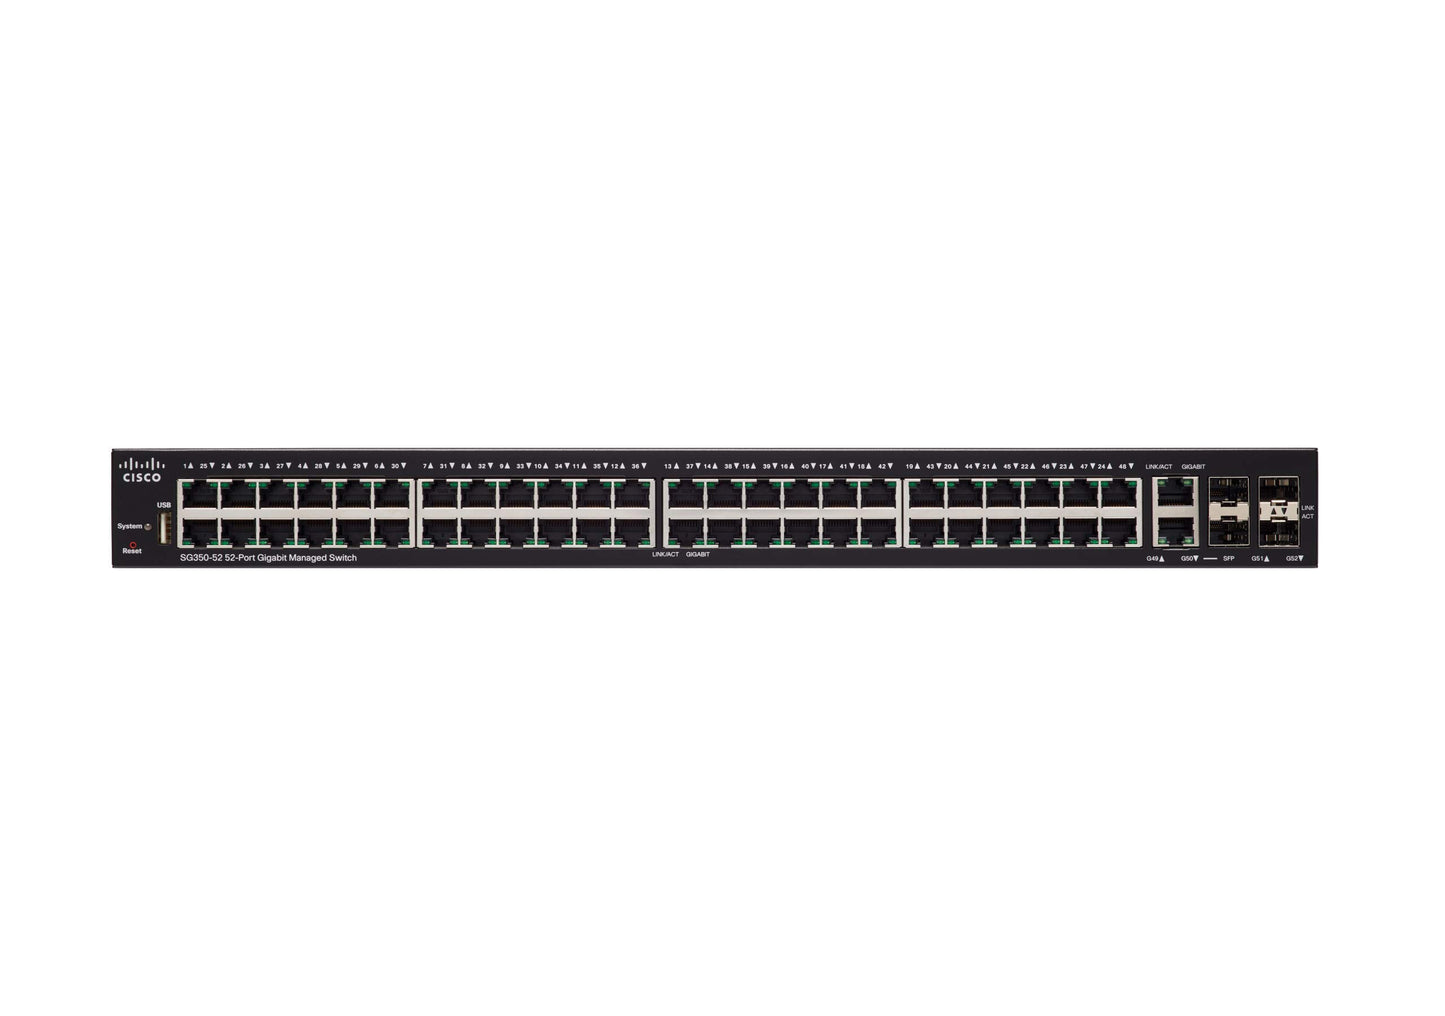 Cisco SG350-52-K9-NA 52-Port Gigabit Managed Switch